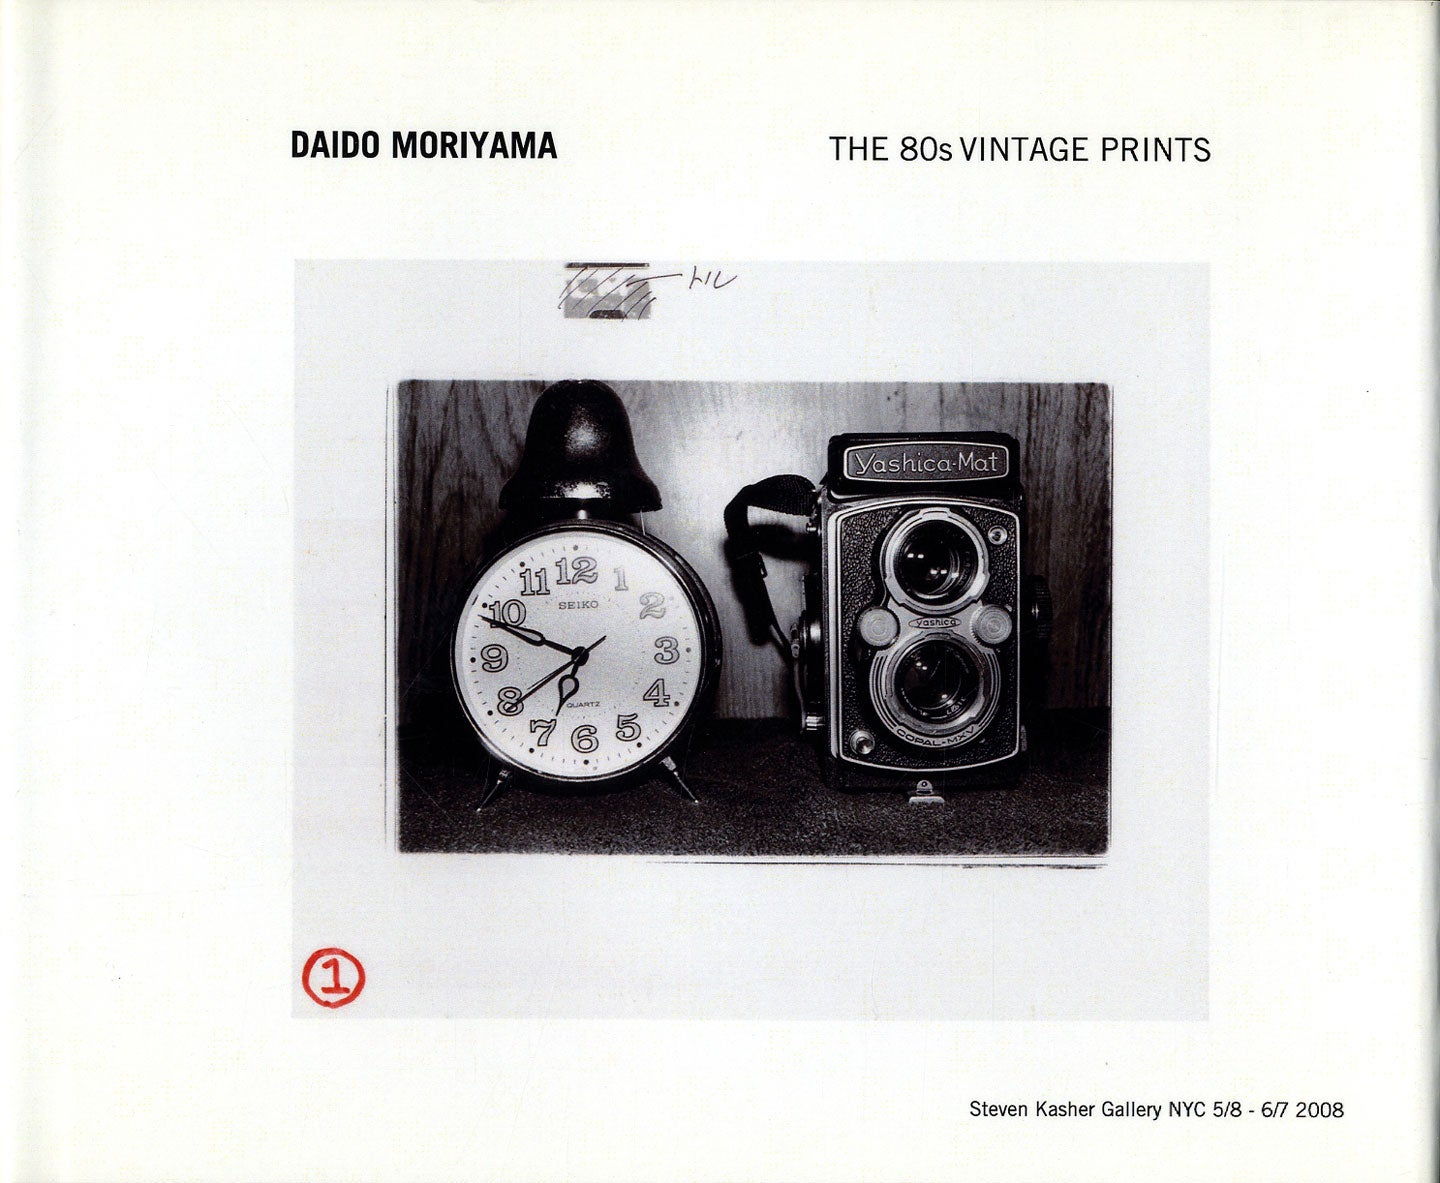 Daido Moriyama: The 80s Vintage Prints (Steven Kasher Gallery, 2008), Limited Edition